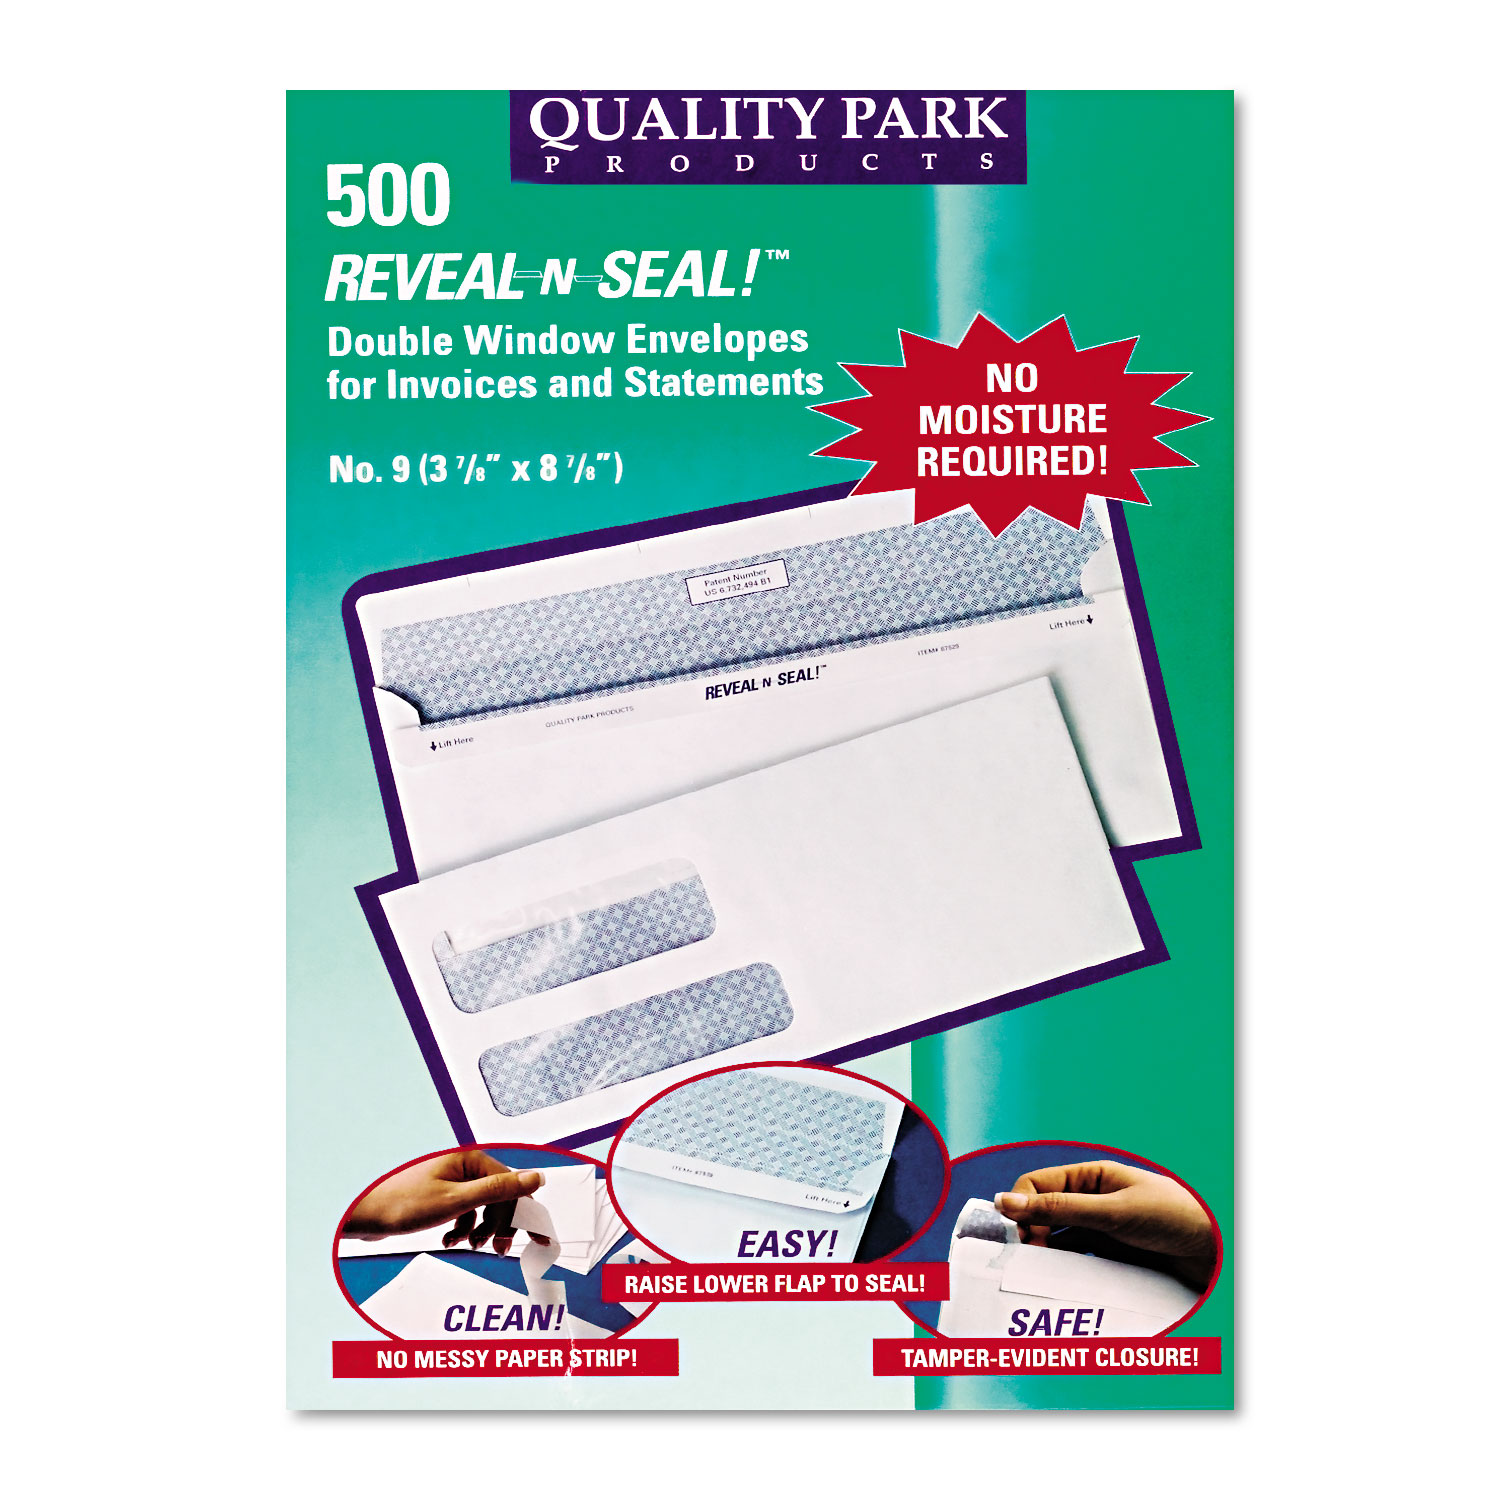 Reveal N Seal Double Window Invoice Envelope, Self Adhesive, White, 500/Box